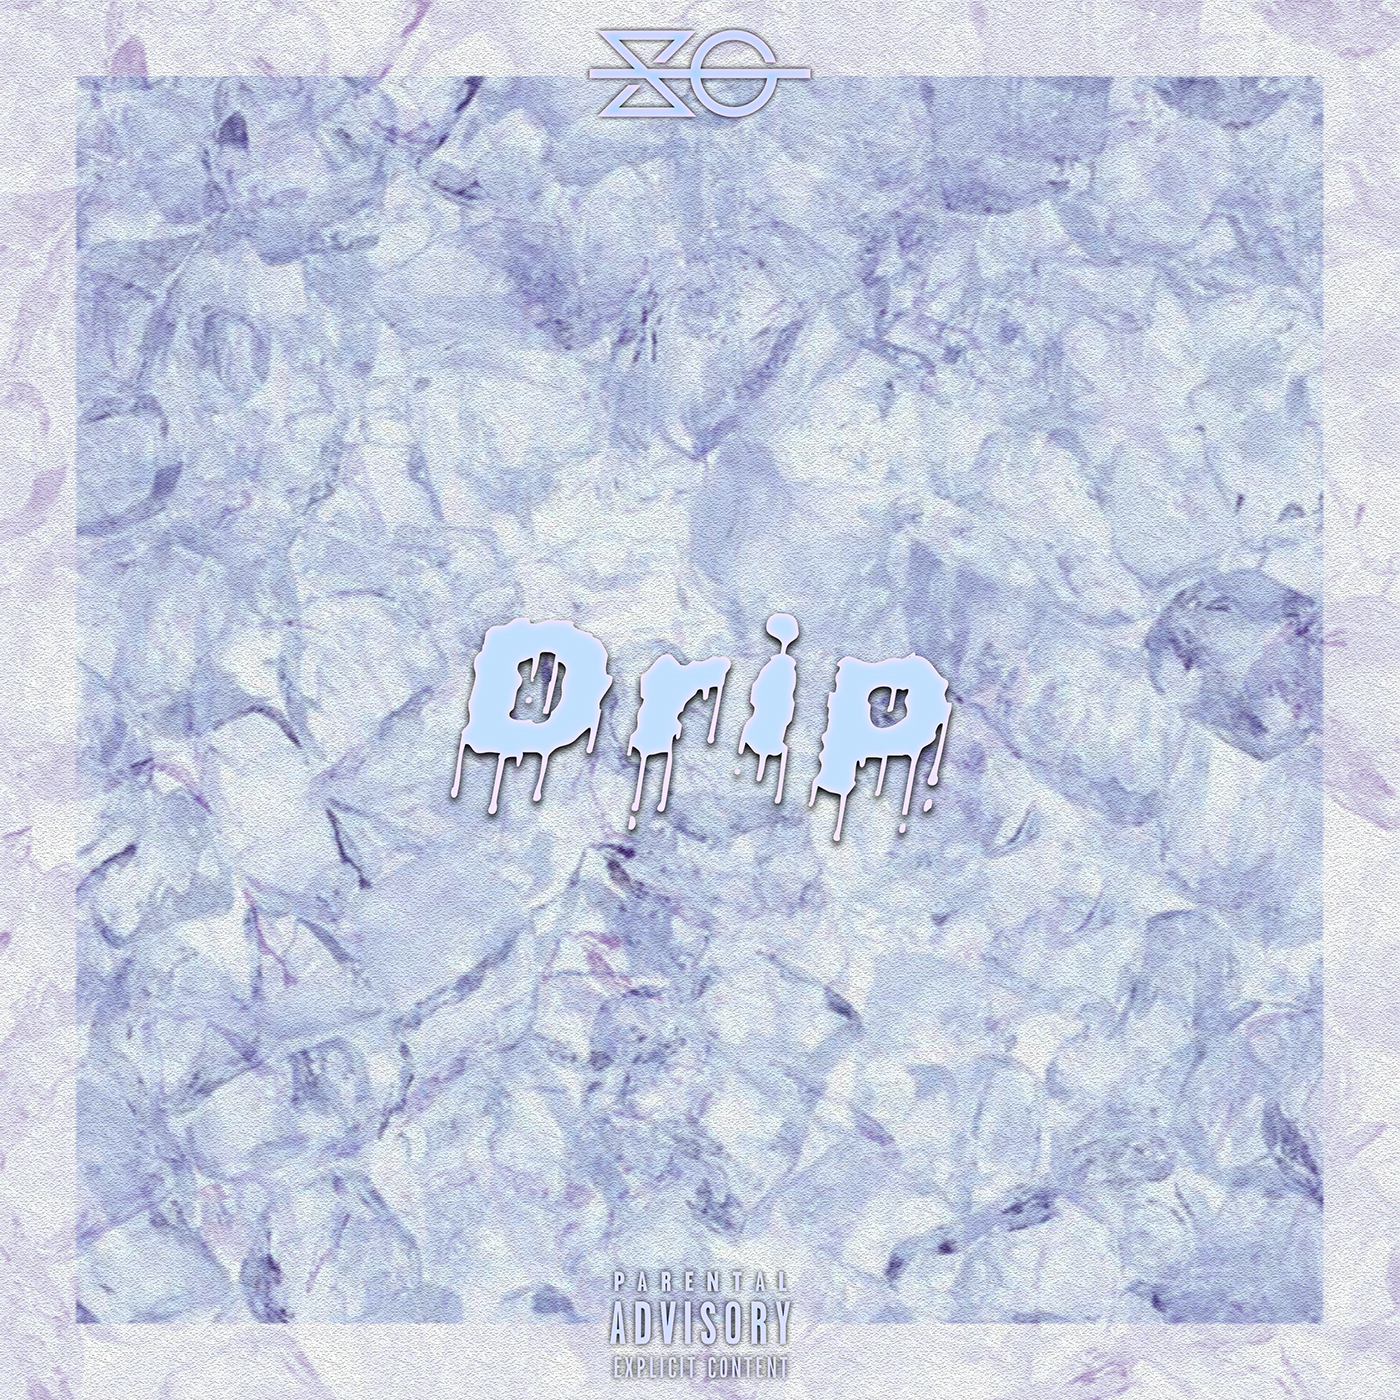 Drip